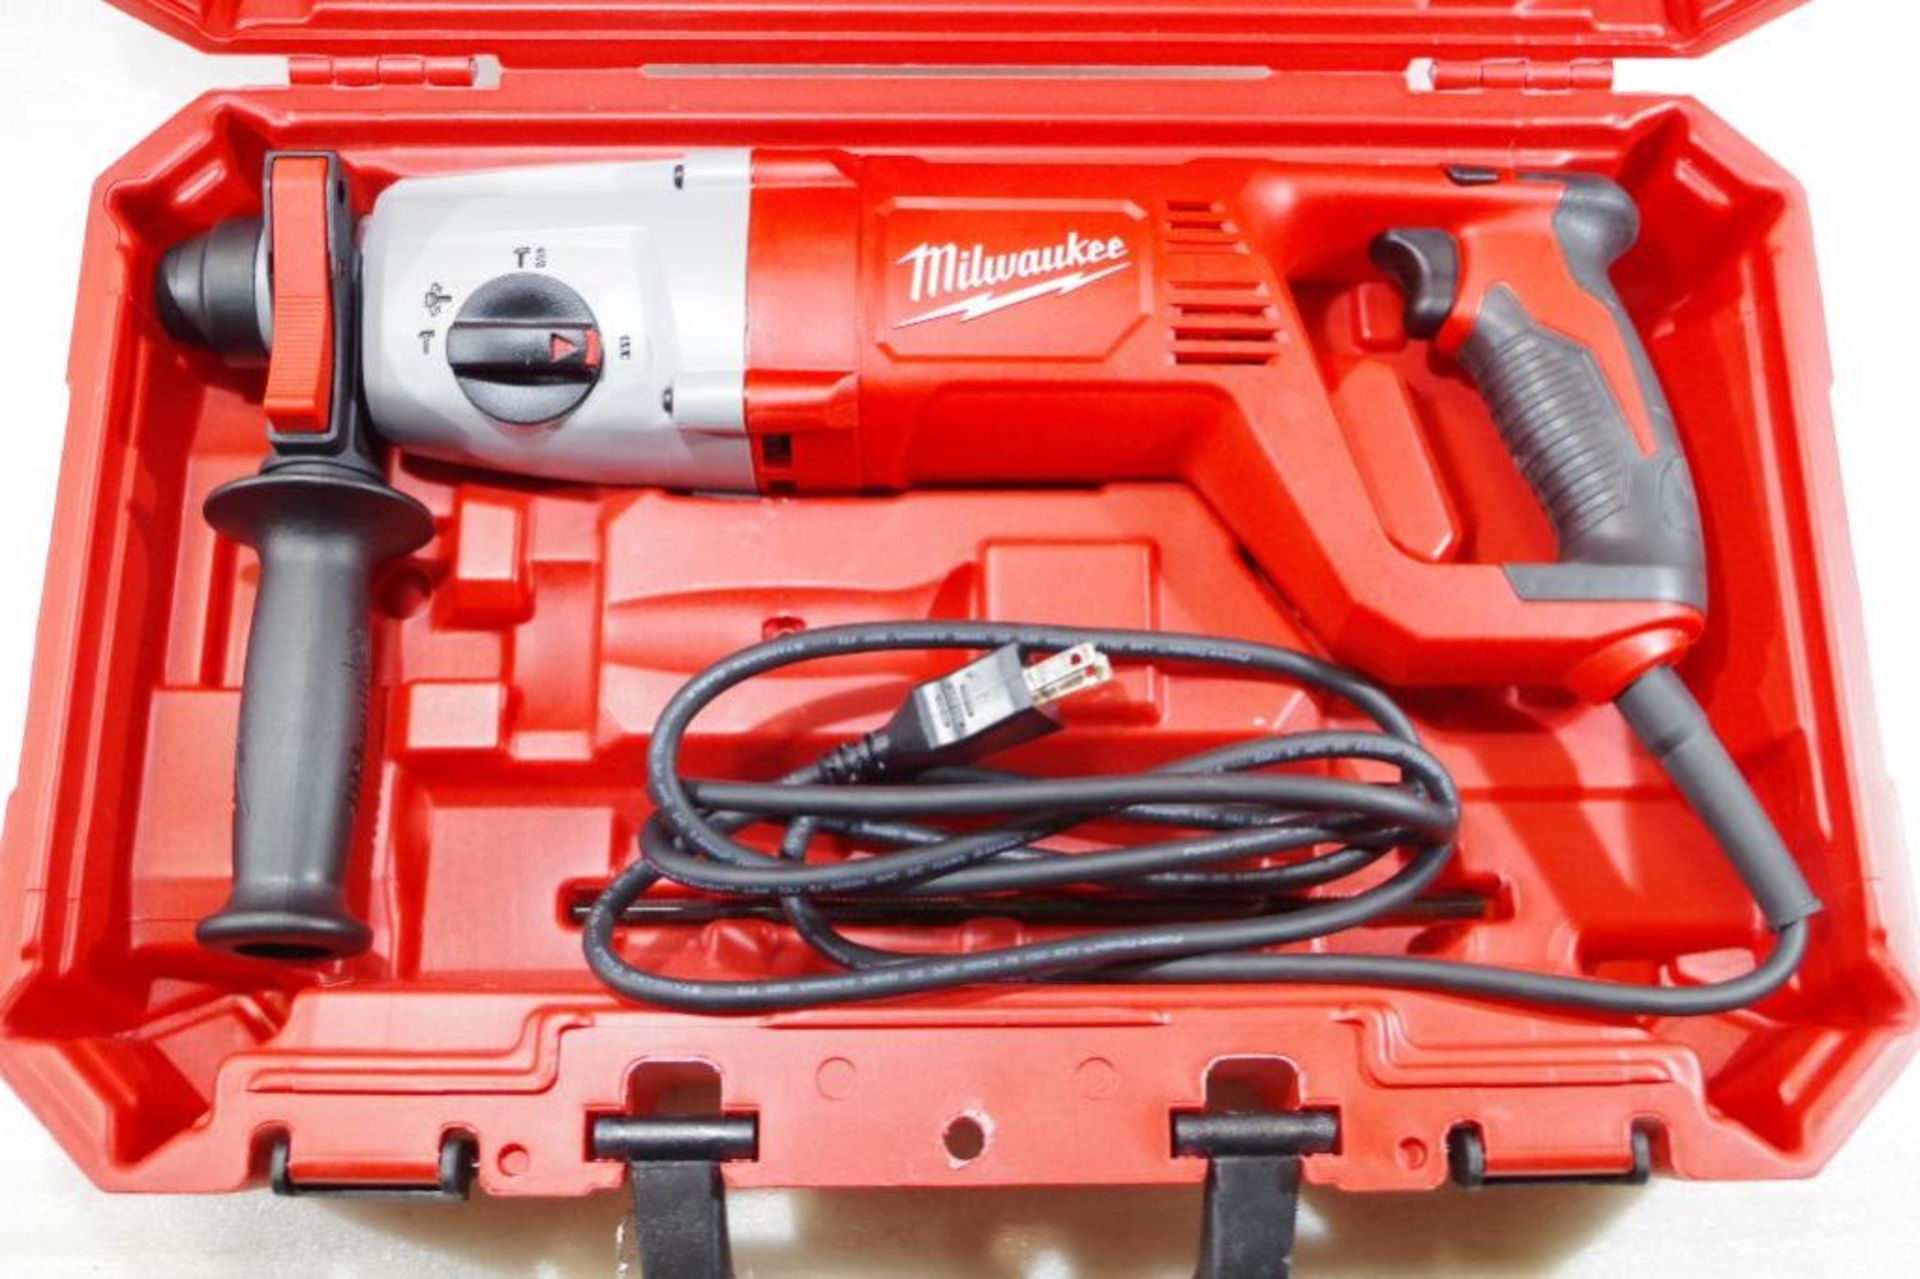 MILWAUKEE 1" SDS Plus Rotary Hammer M/N 5262-21 w/ Tool Grip & Case